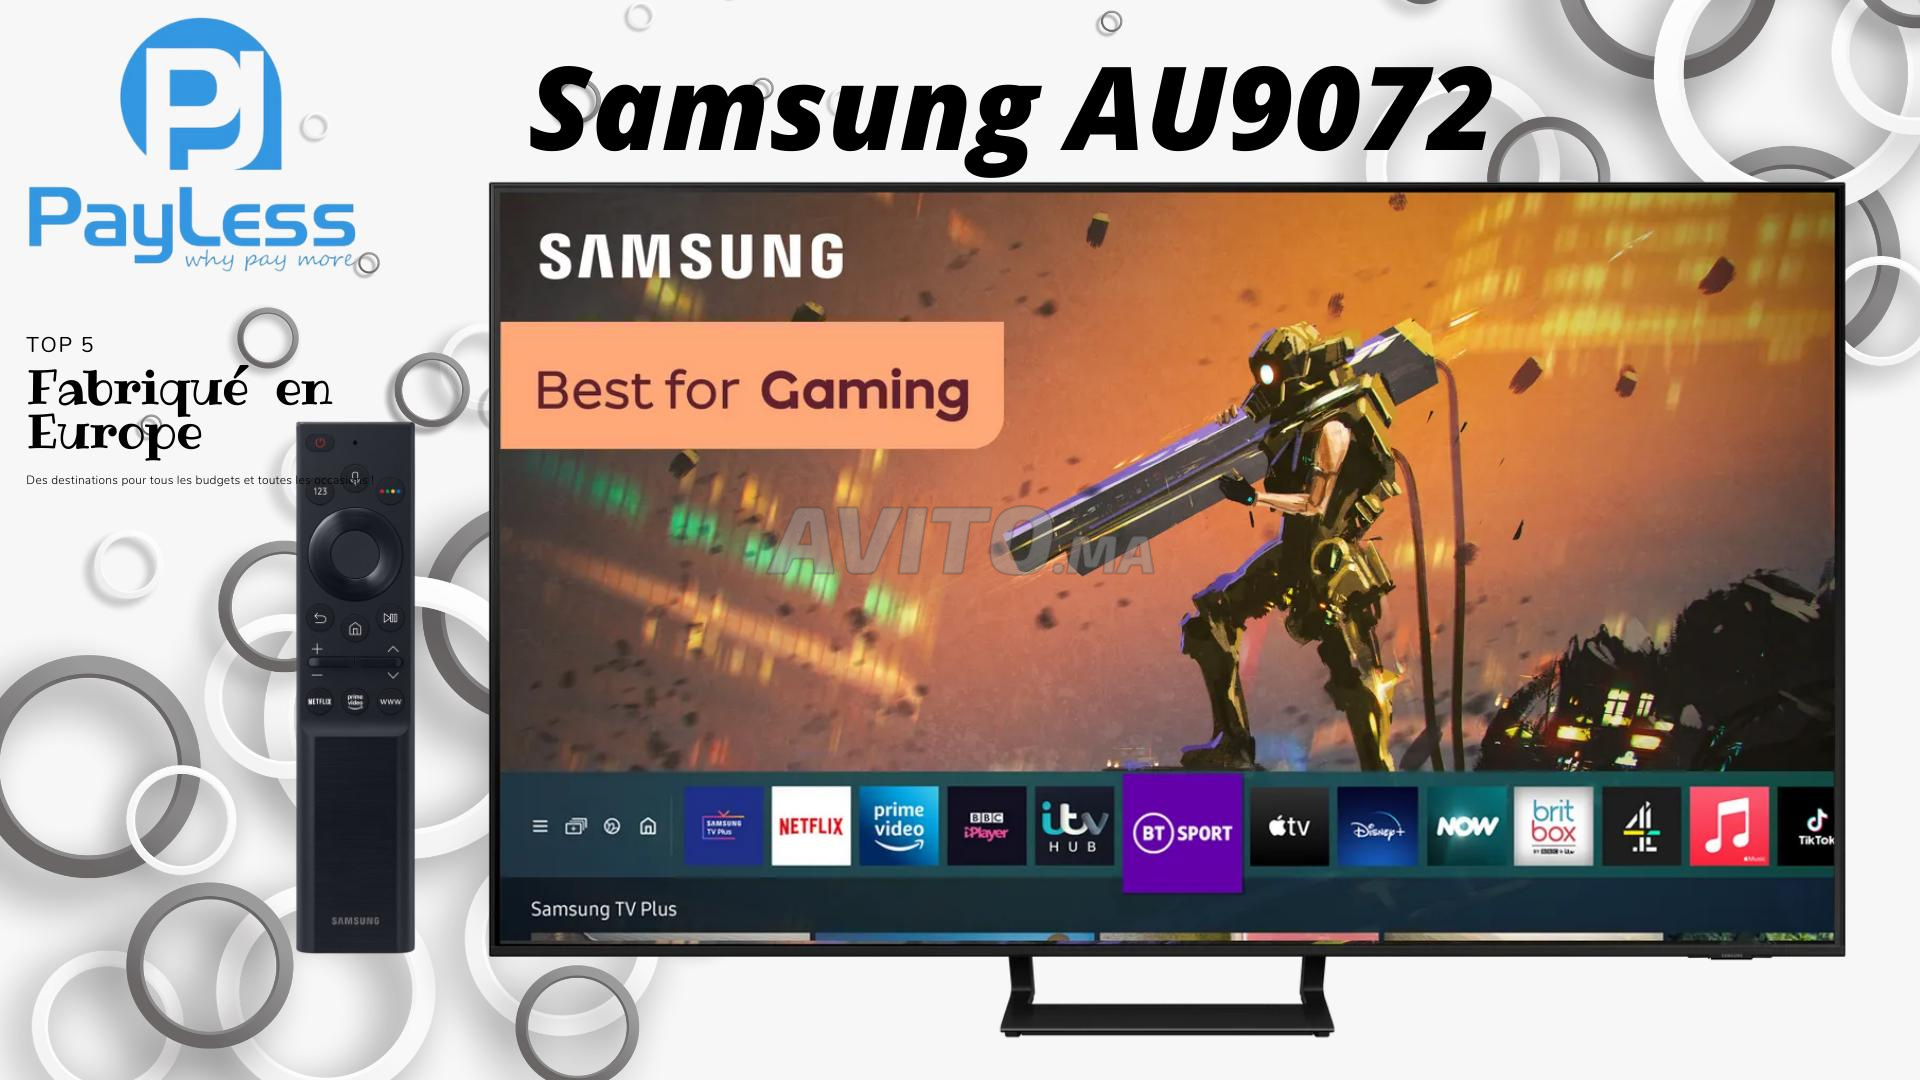 Tv Samsung 43AU9075 Smart Tv Uhd 4k Serie9 europe - 1